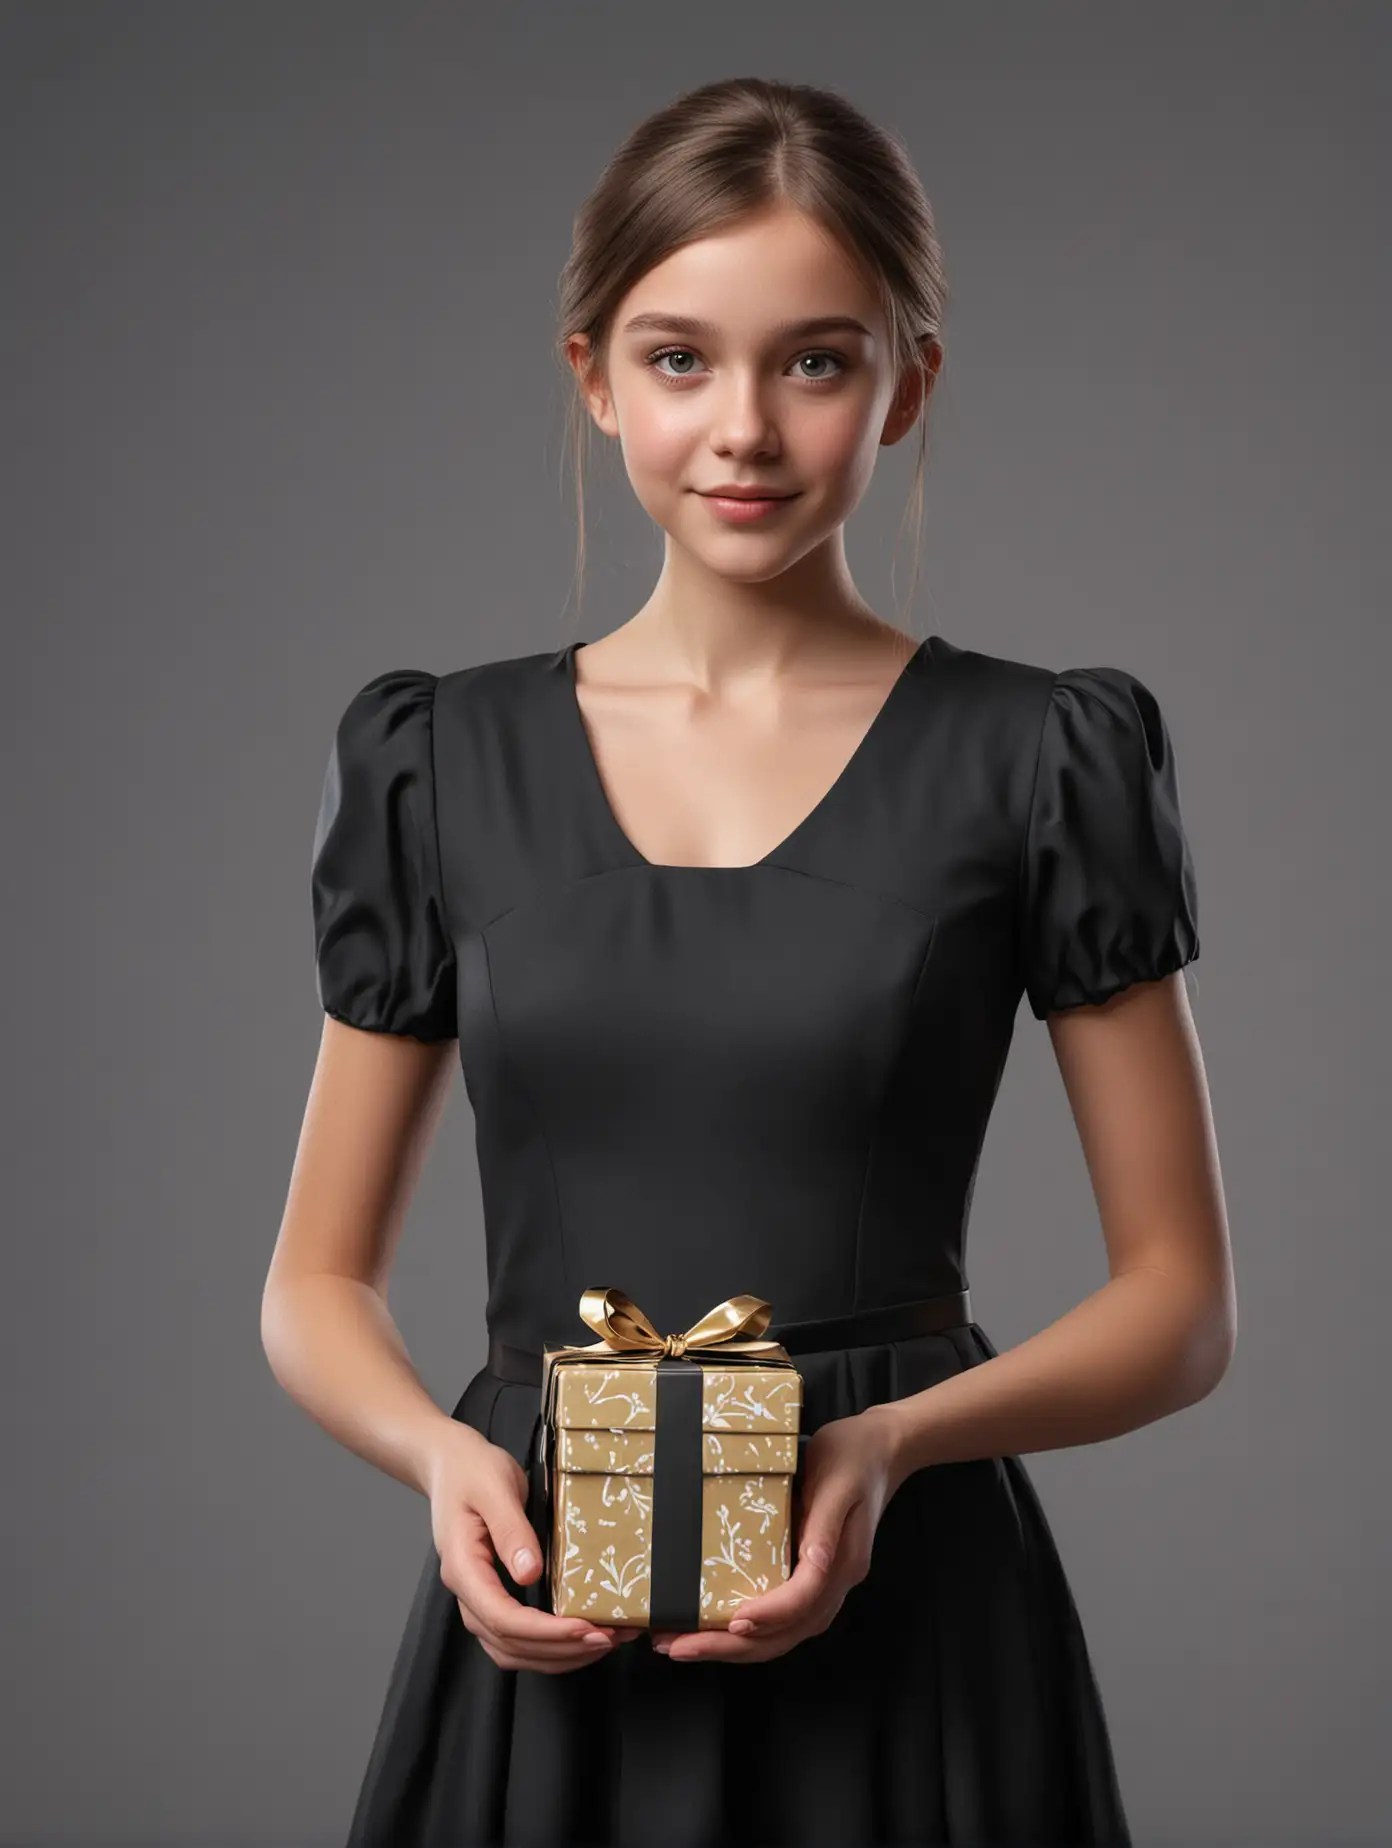 Elegant Girl in Black Formal Dress Holding a Gift